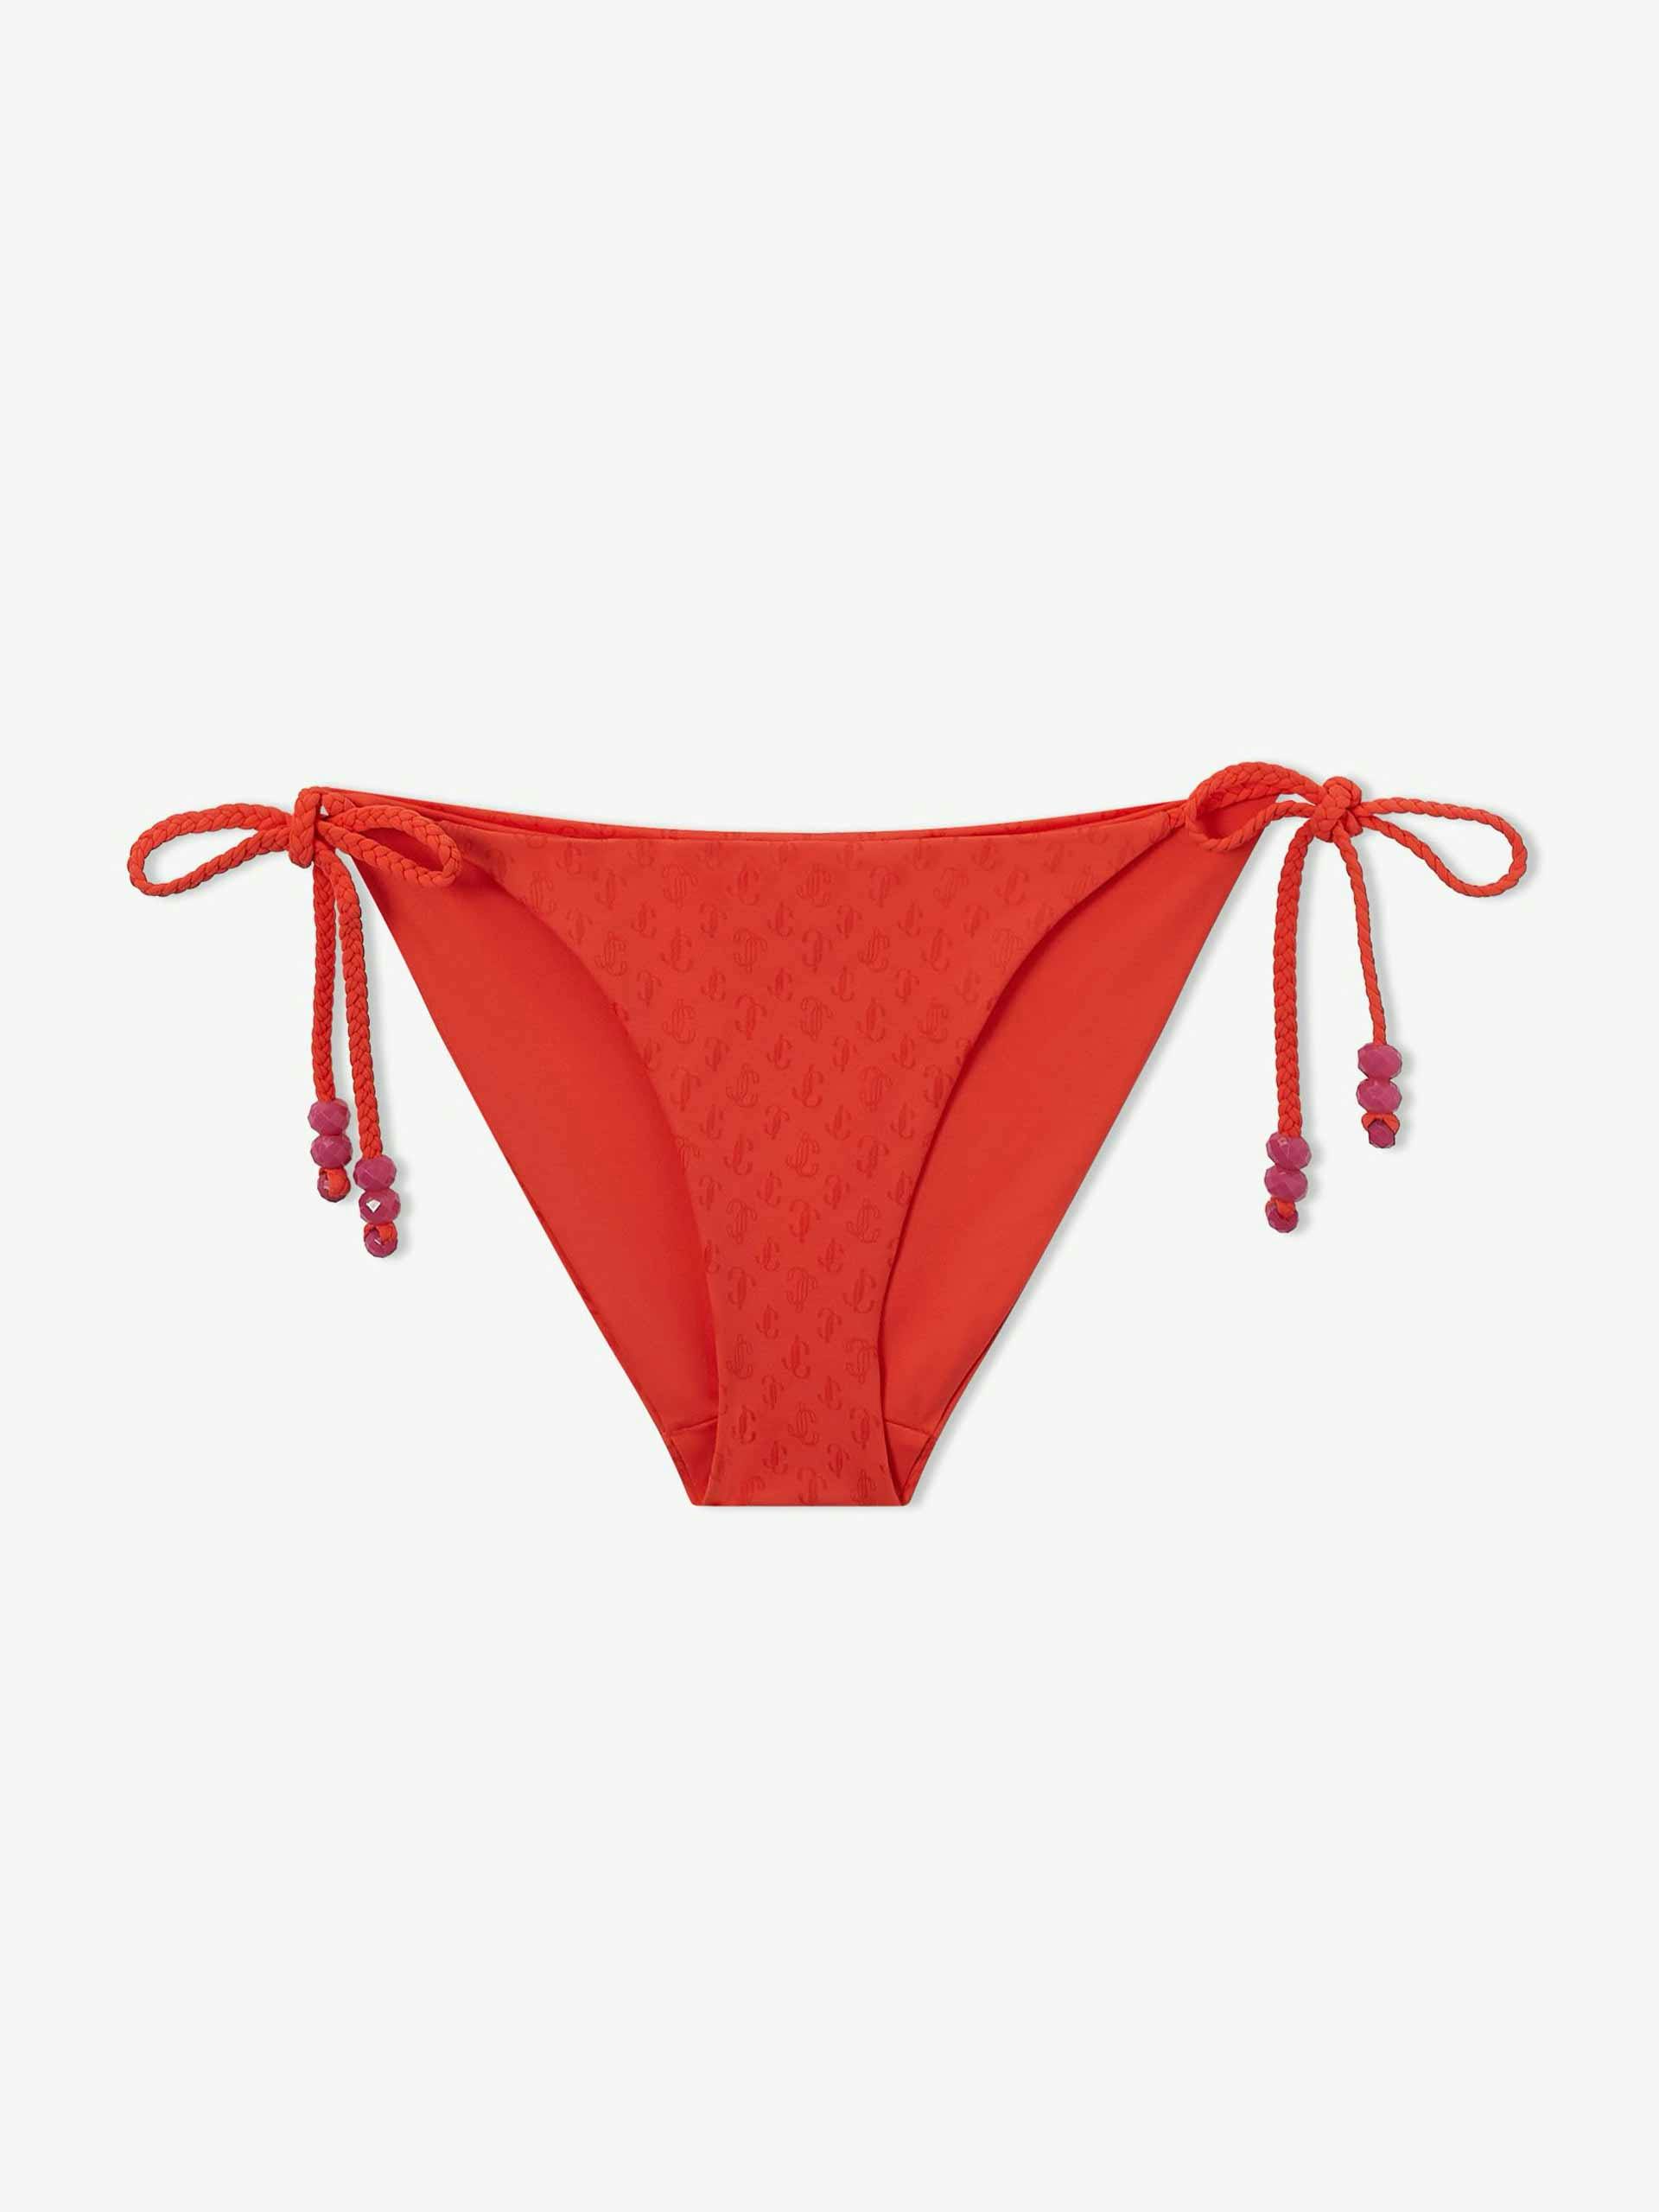 Red JC monogram bikini bottoms